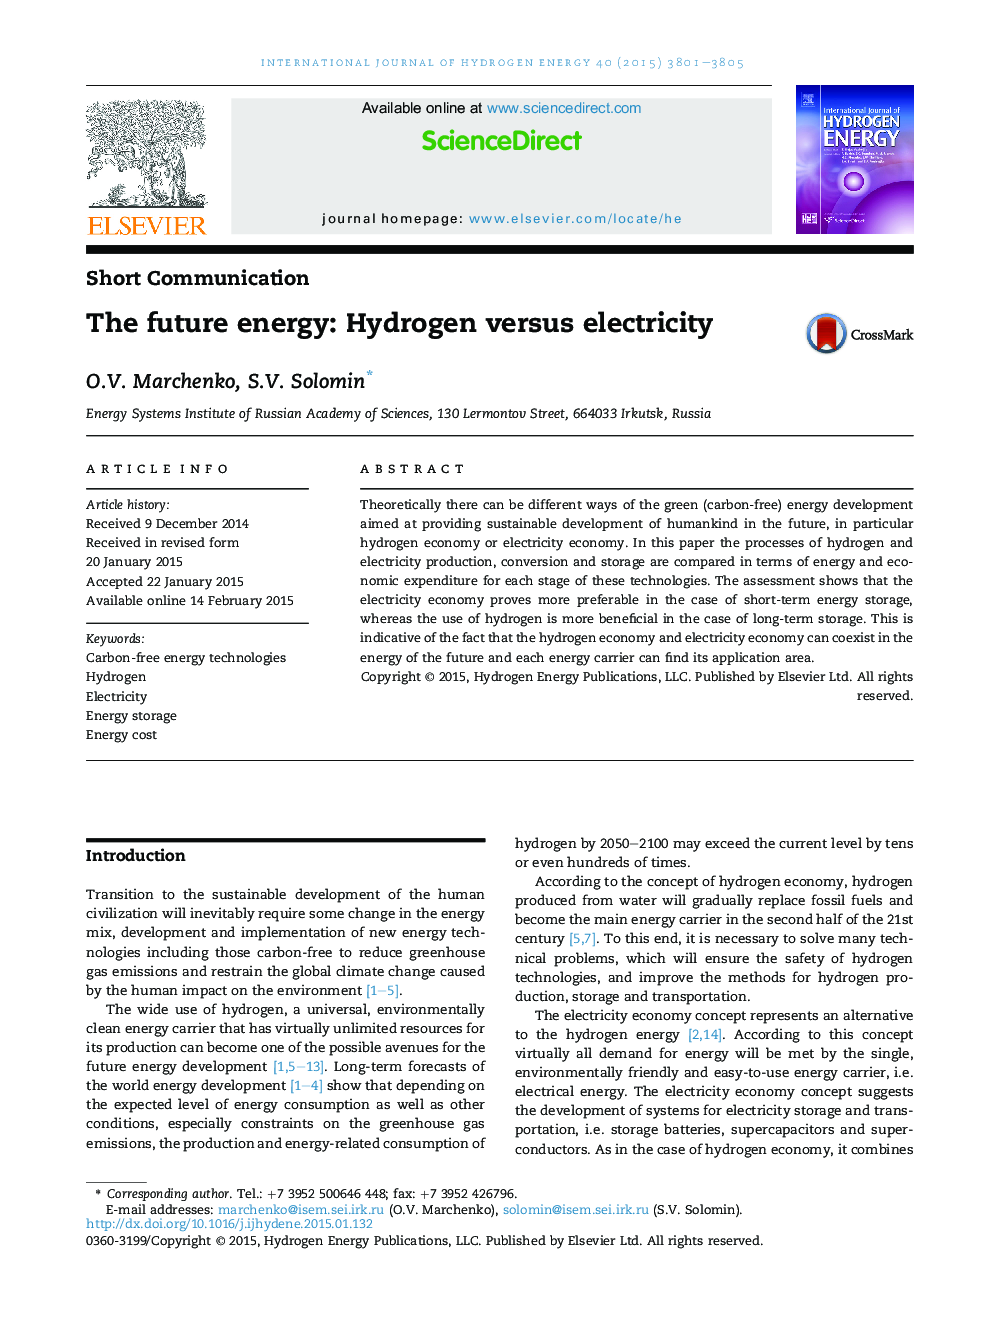 The future energy: Hydrogen versus electricity